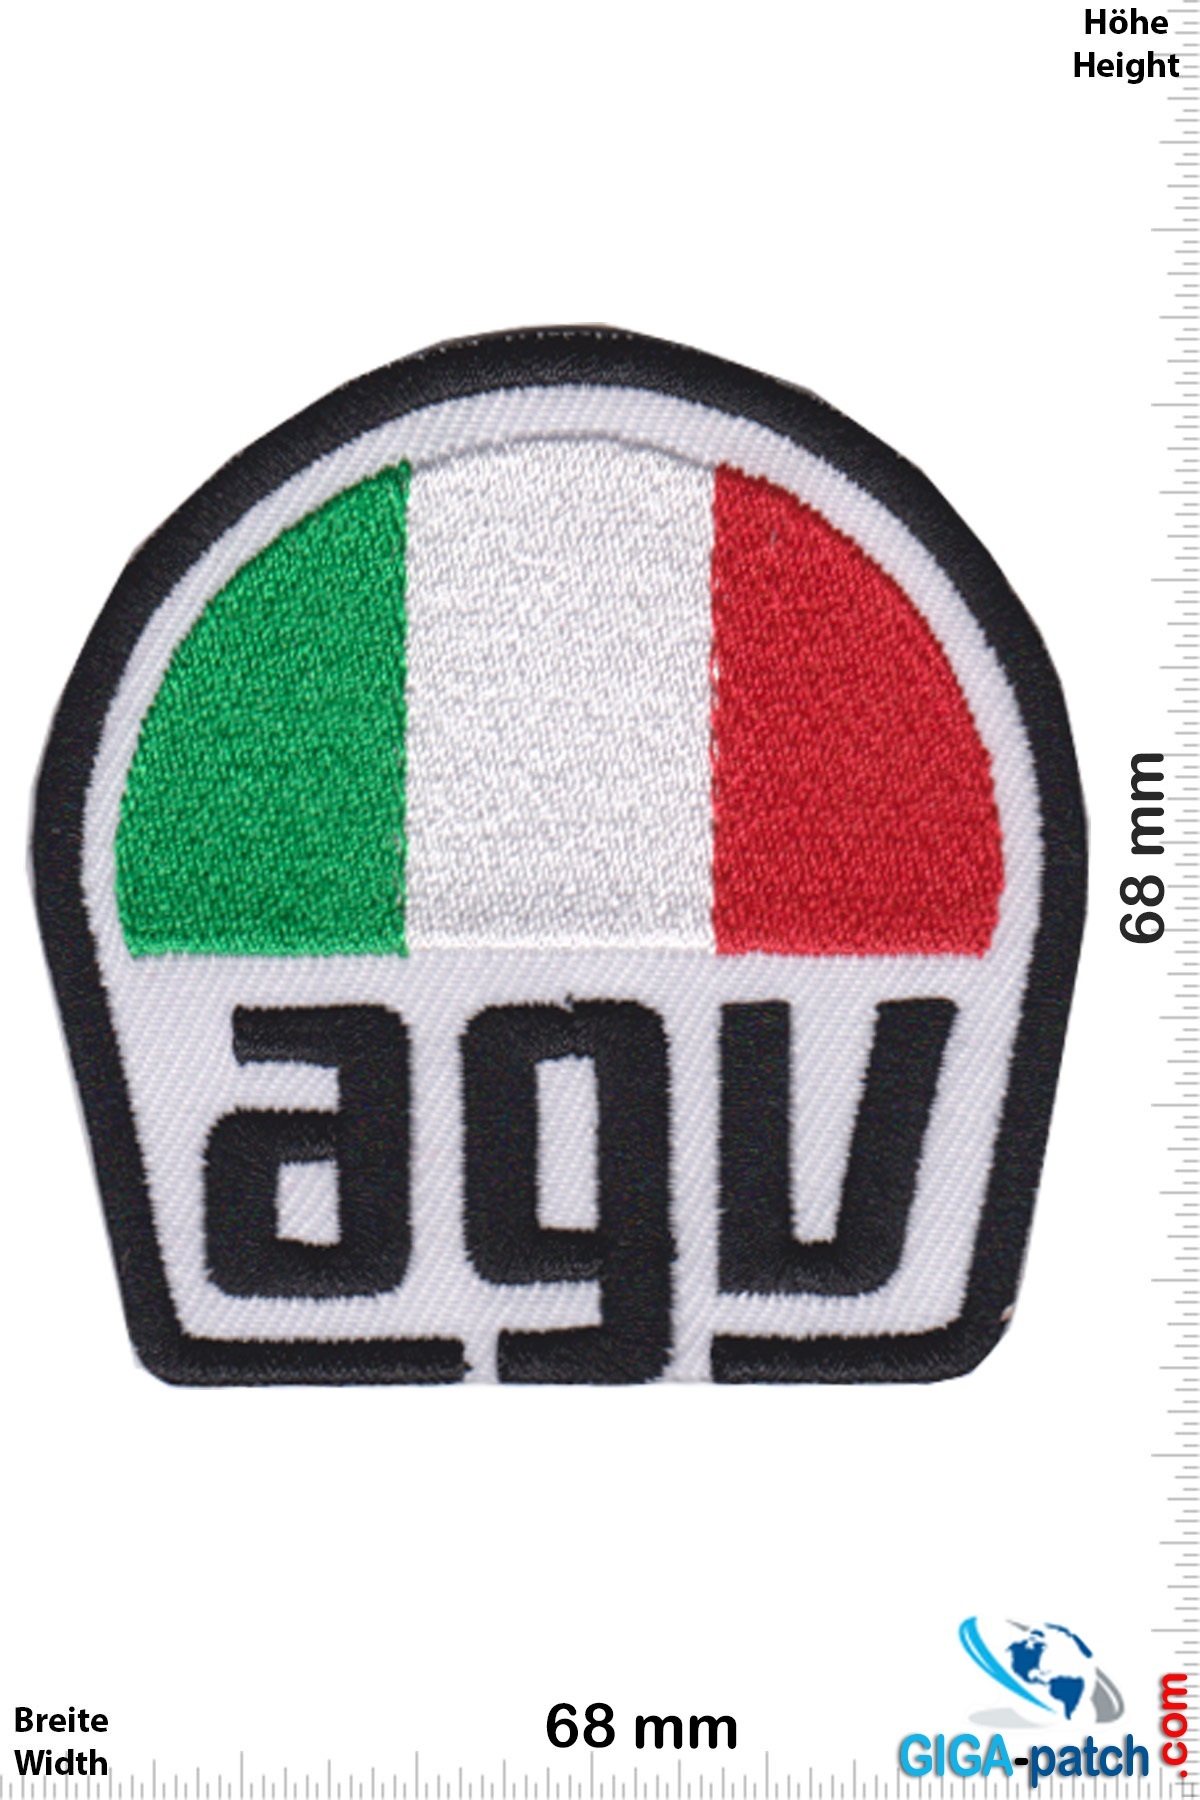 avg agv- Racing - Italy